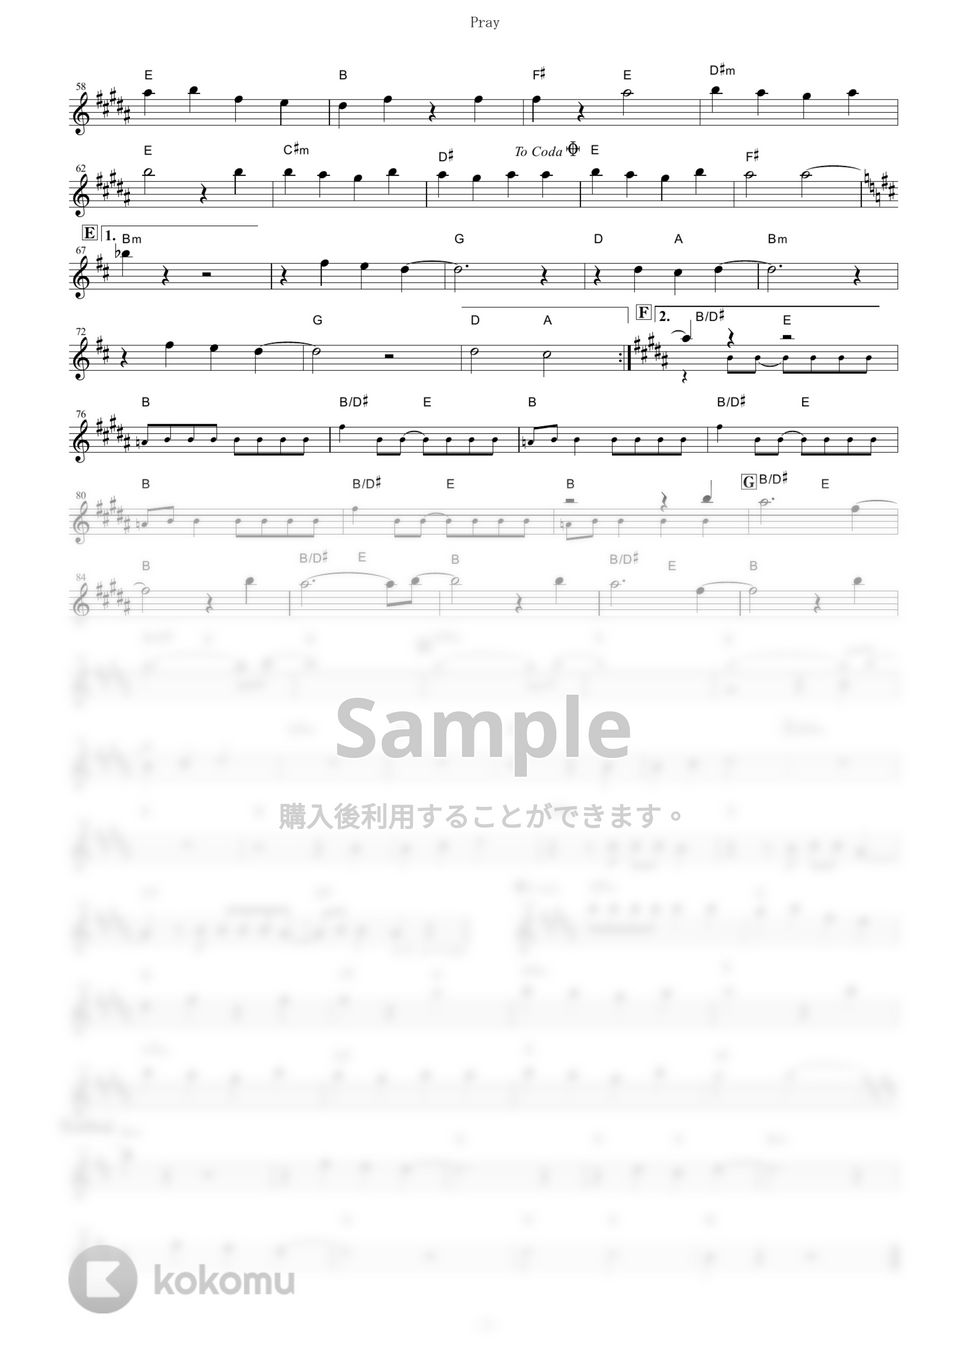 Tommy heavenly6 - Pray (『銀魂』 / in C) by muta-sax